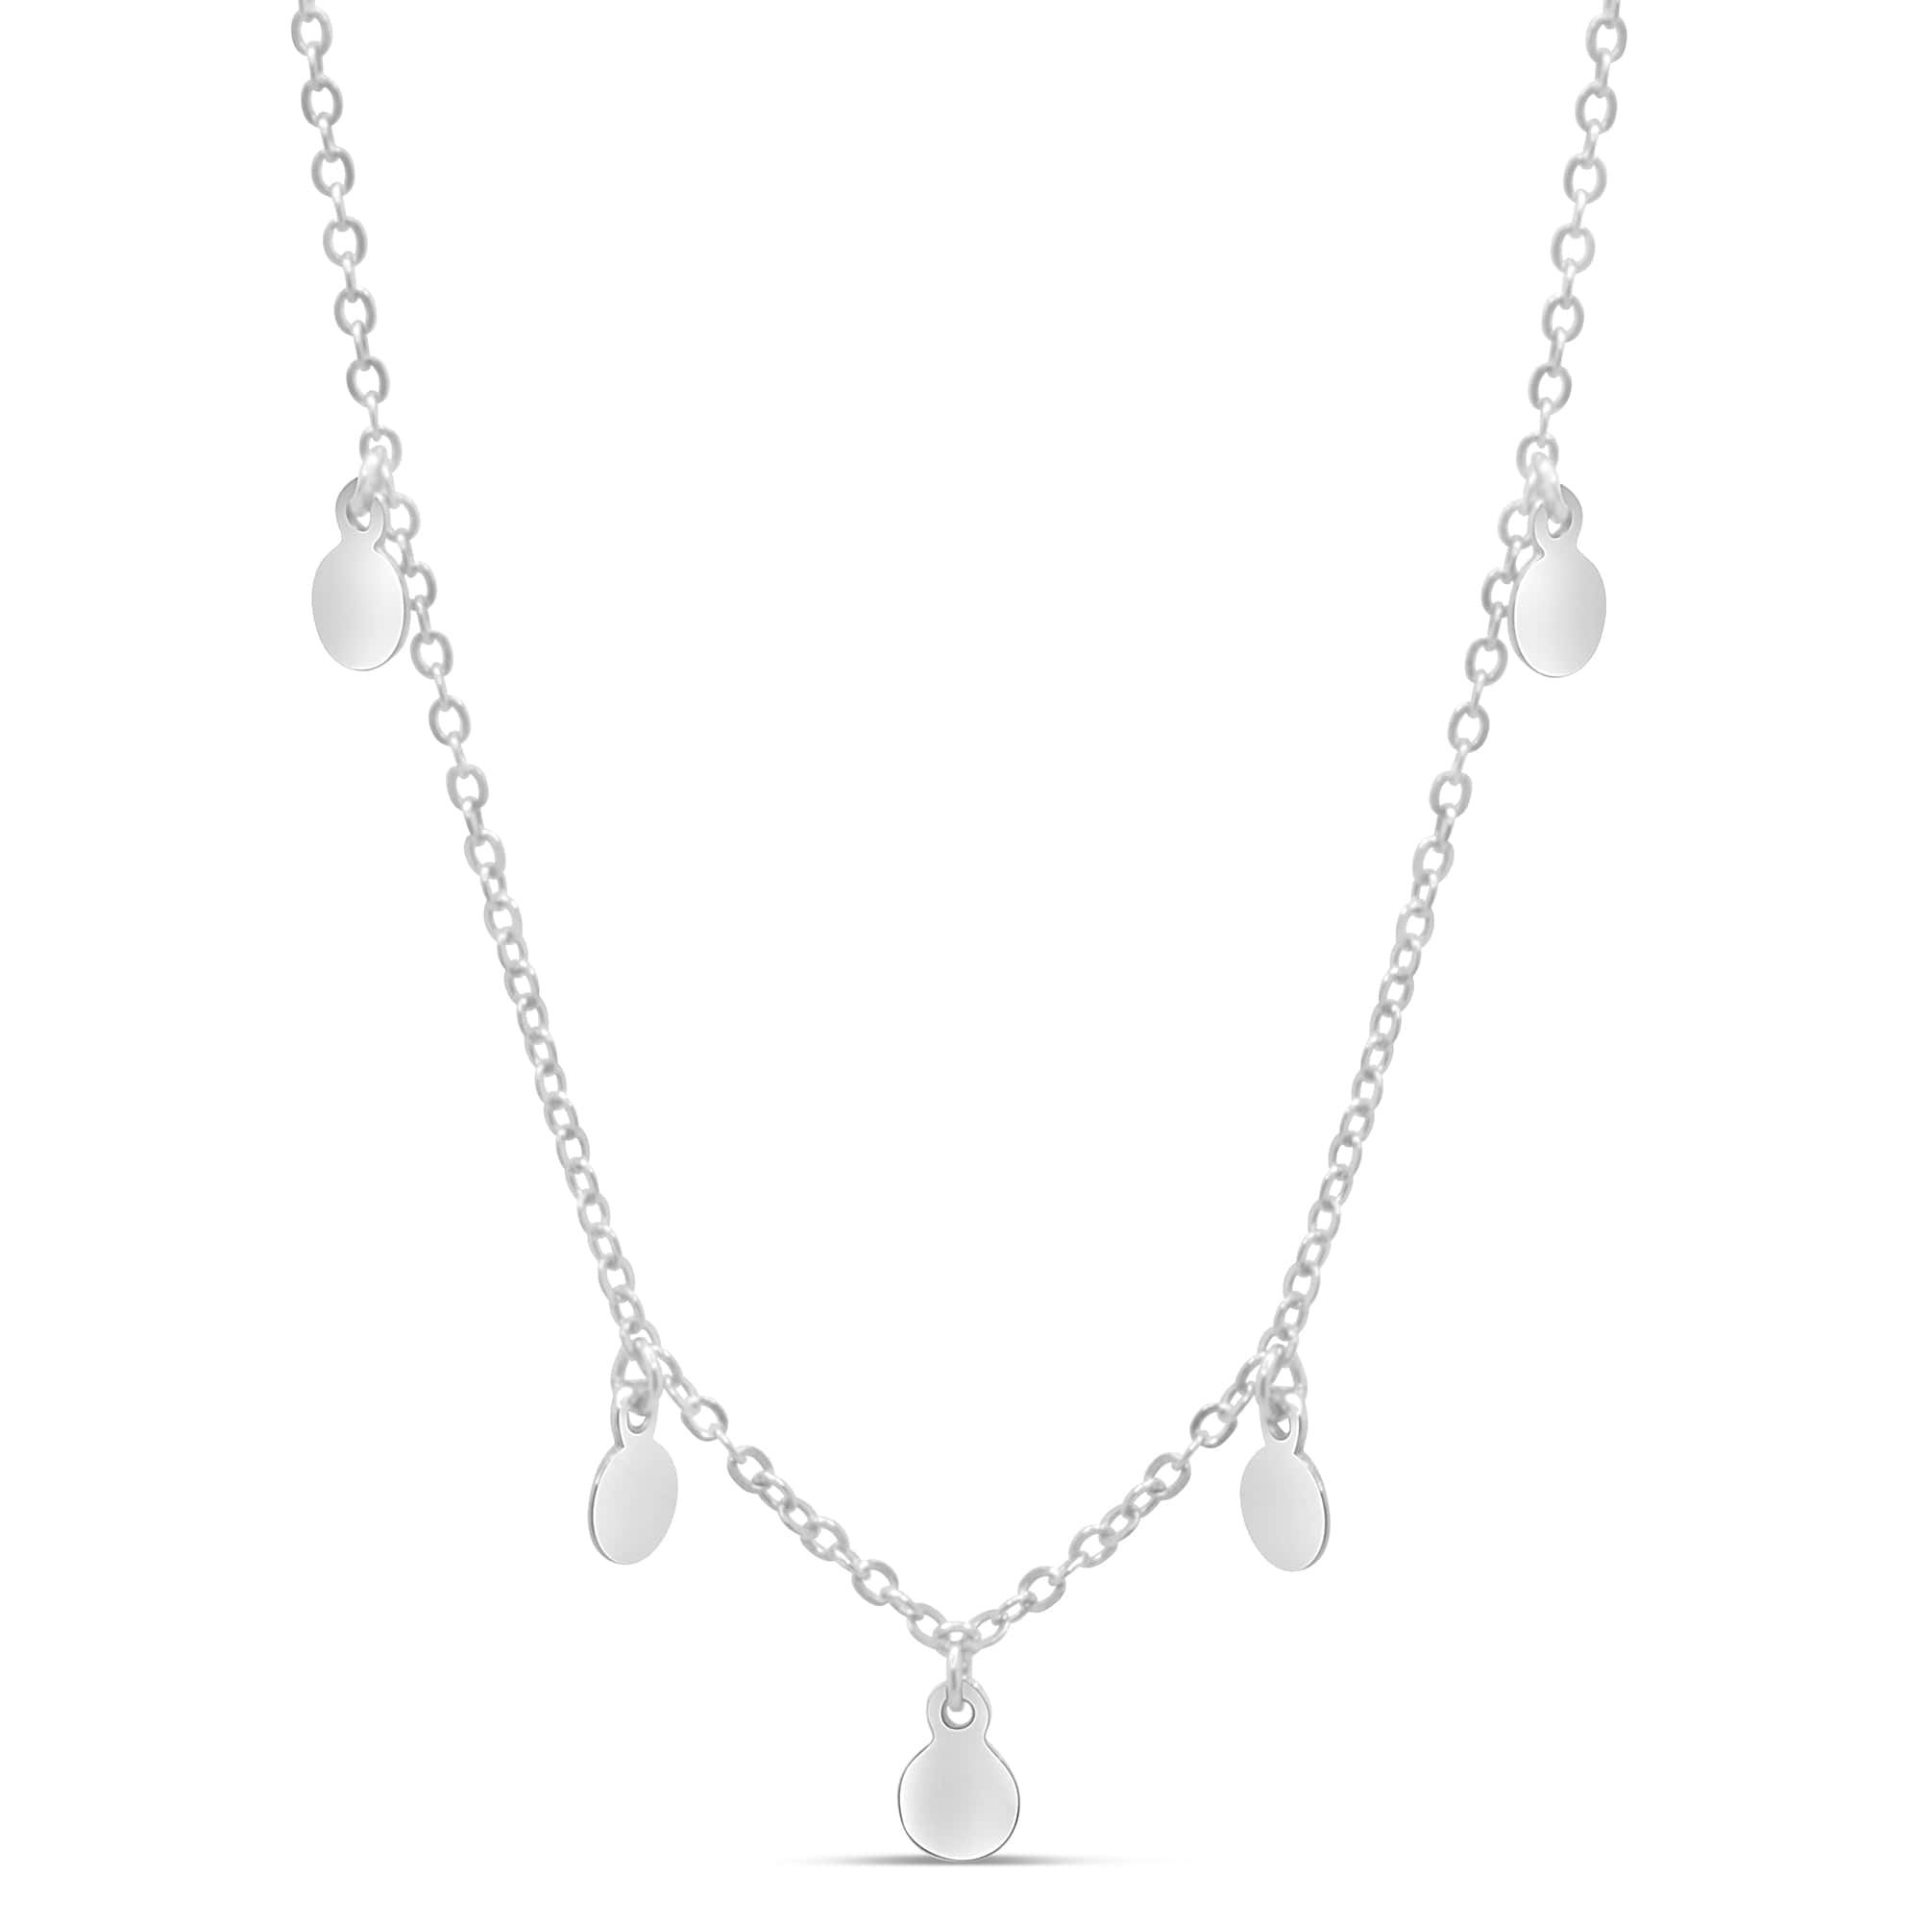 Sterling silver boho necklace